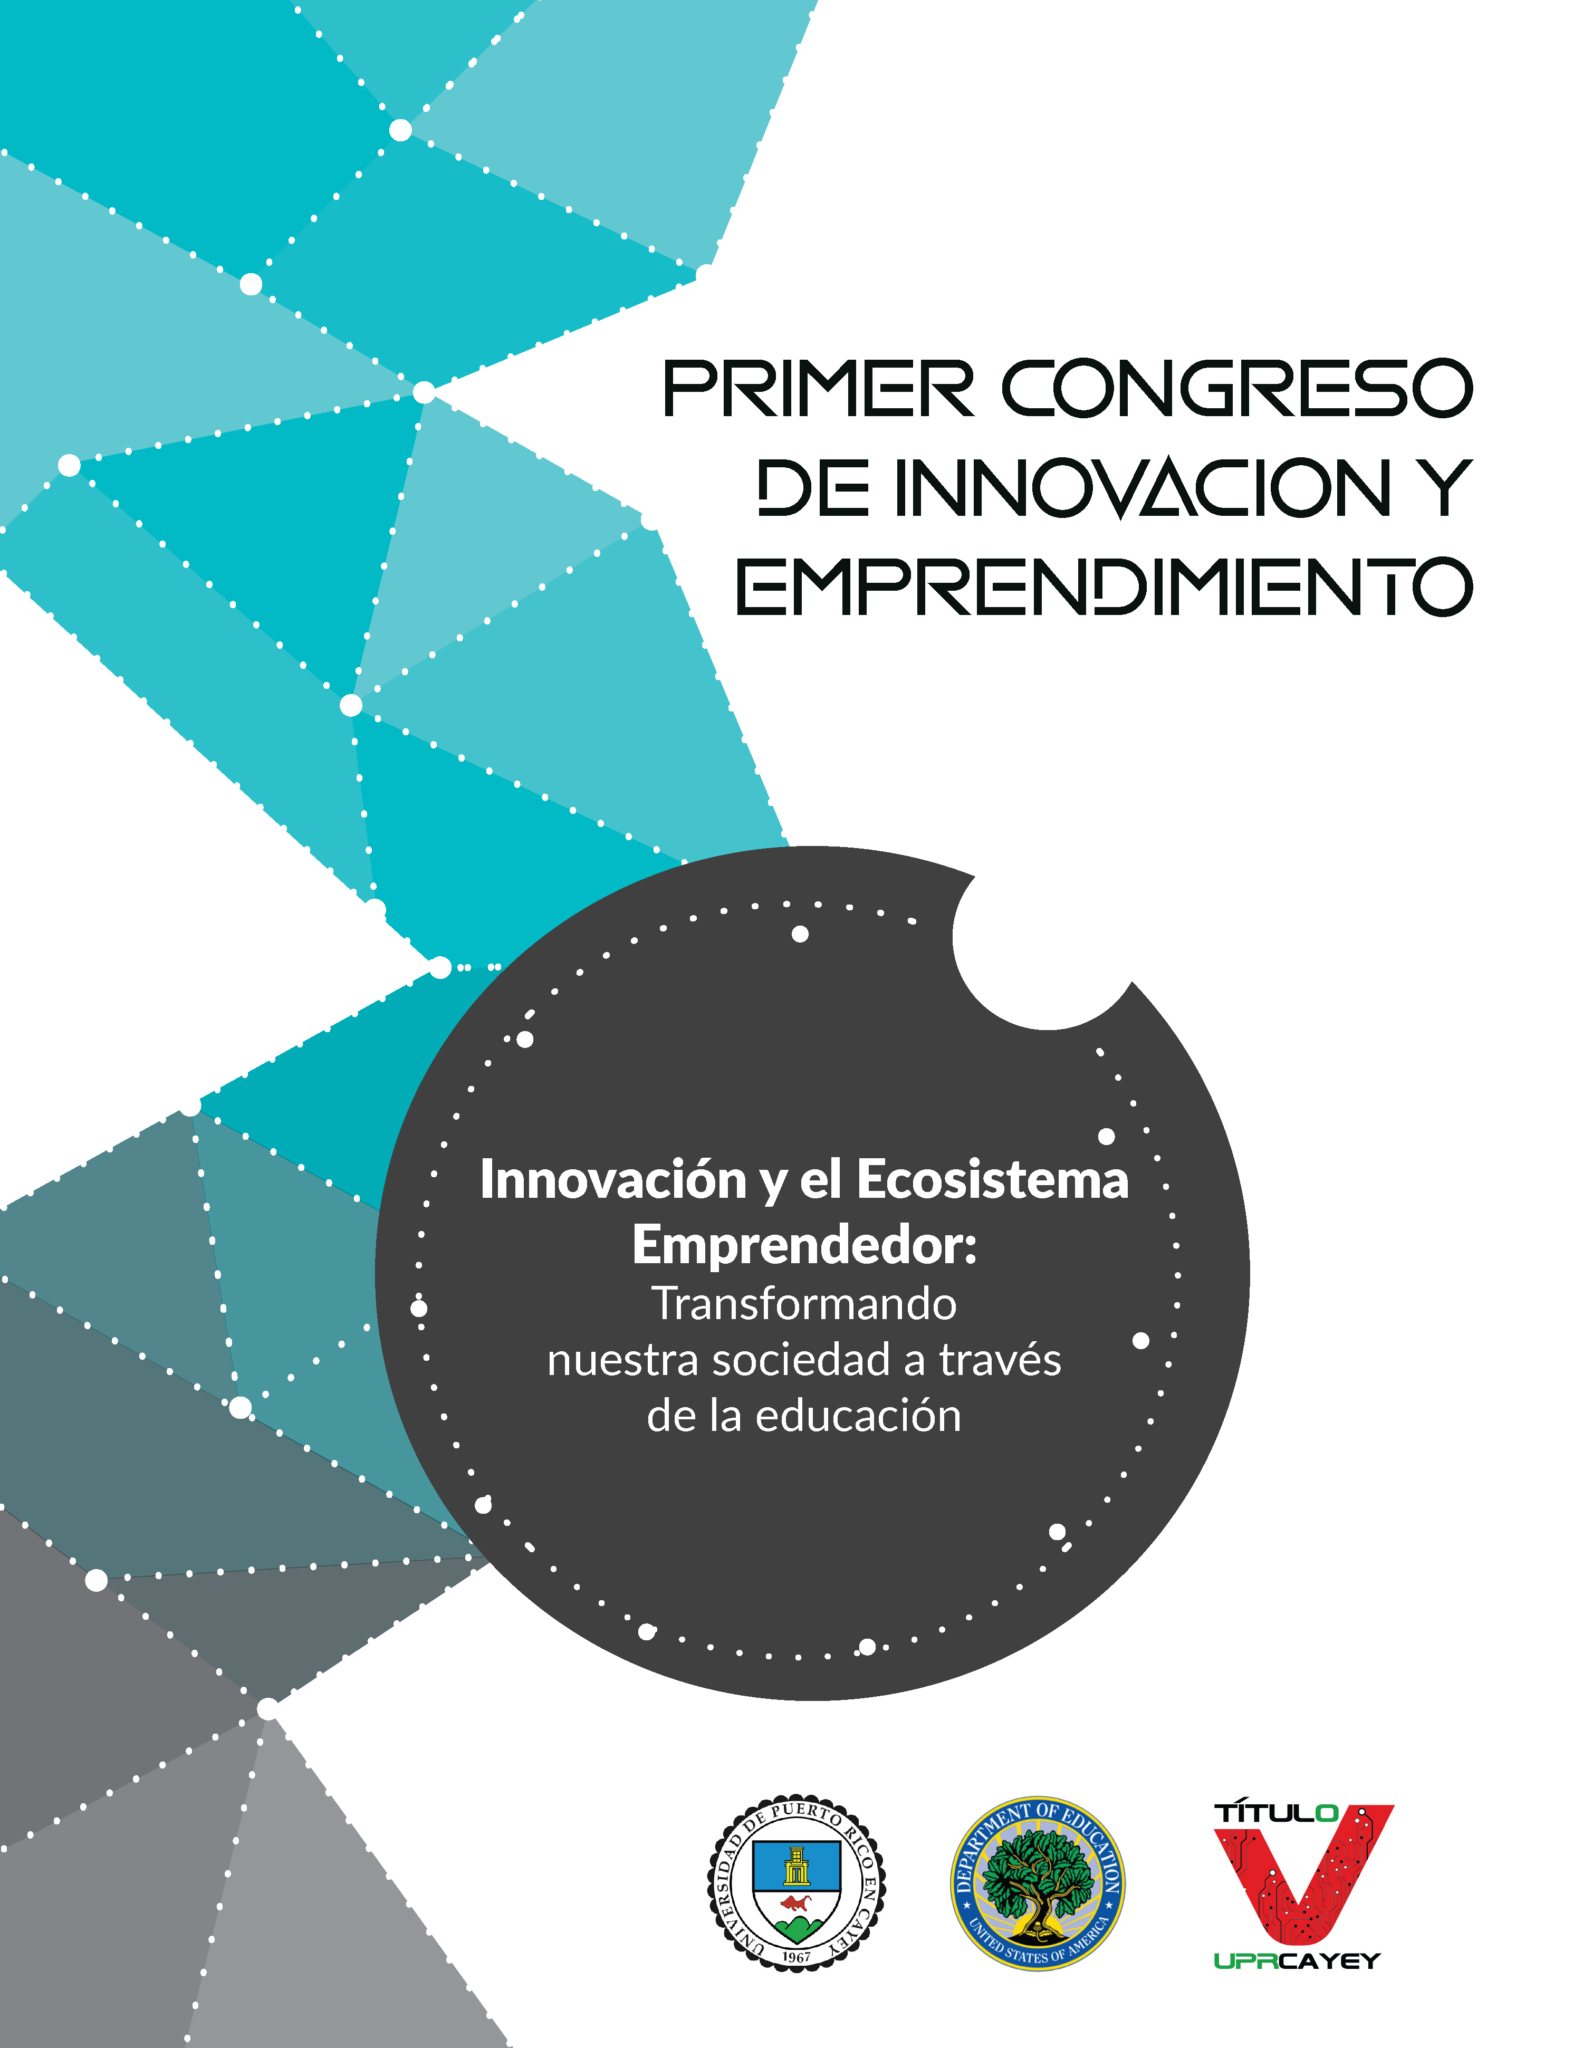 Imagen del First Congress of Innovation and Entrepreneurship Programme